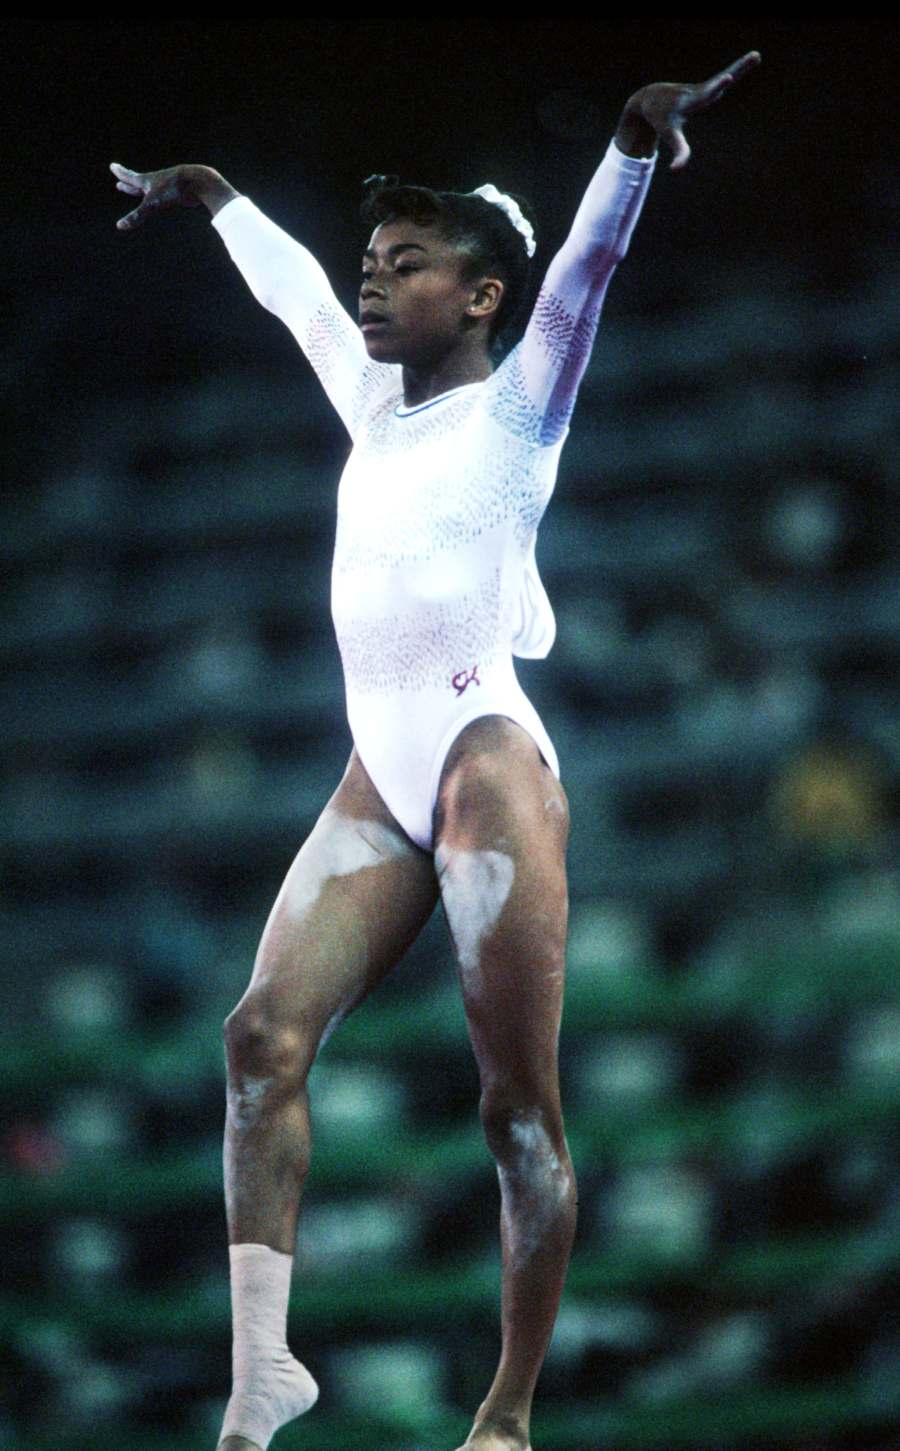 US Women's Gymnastics Leotards Contain Subtle Nod to American History